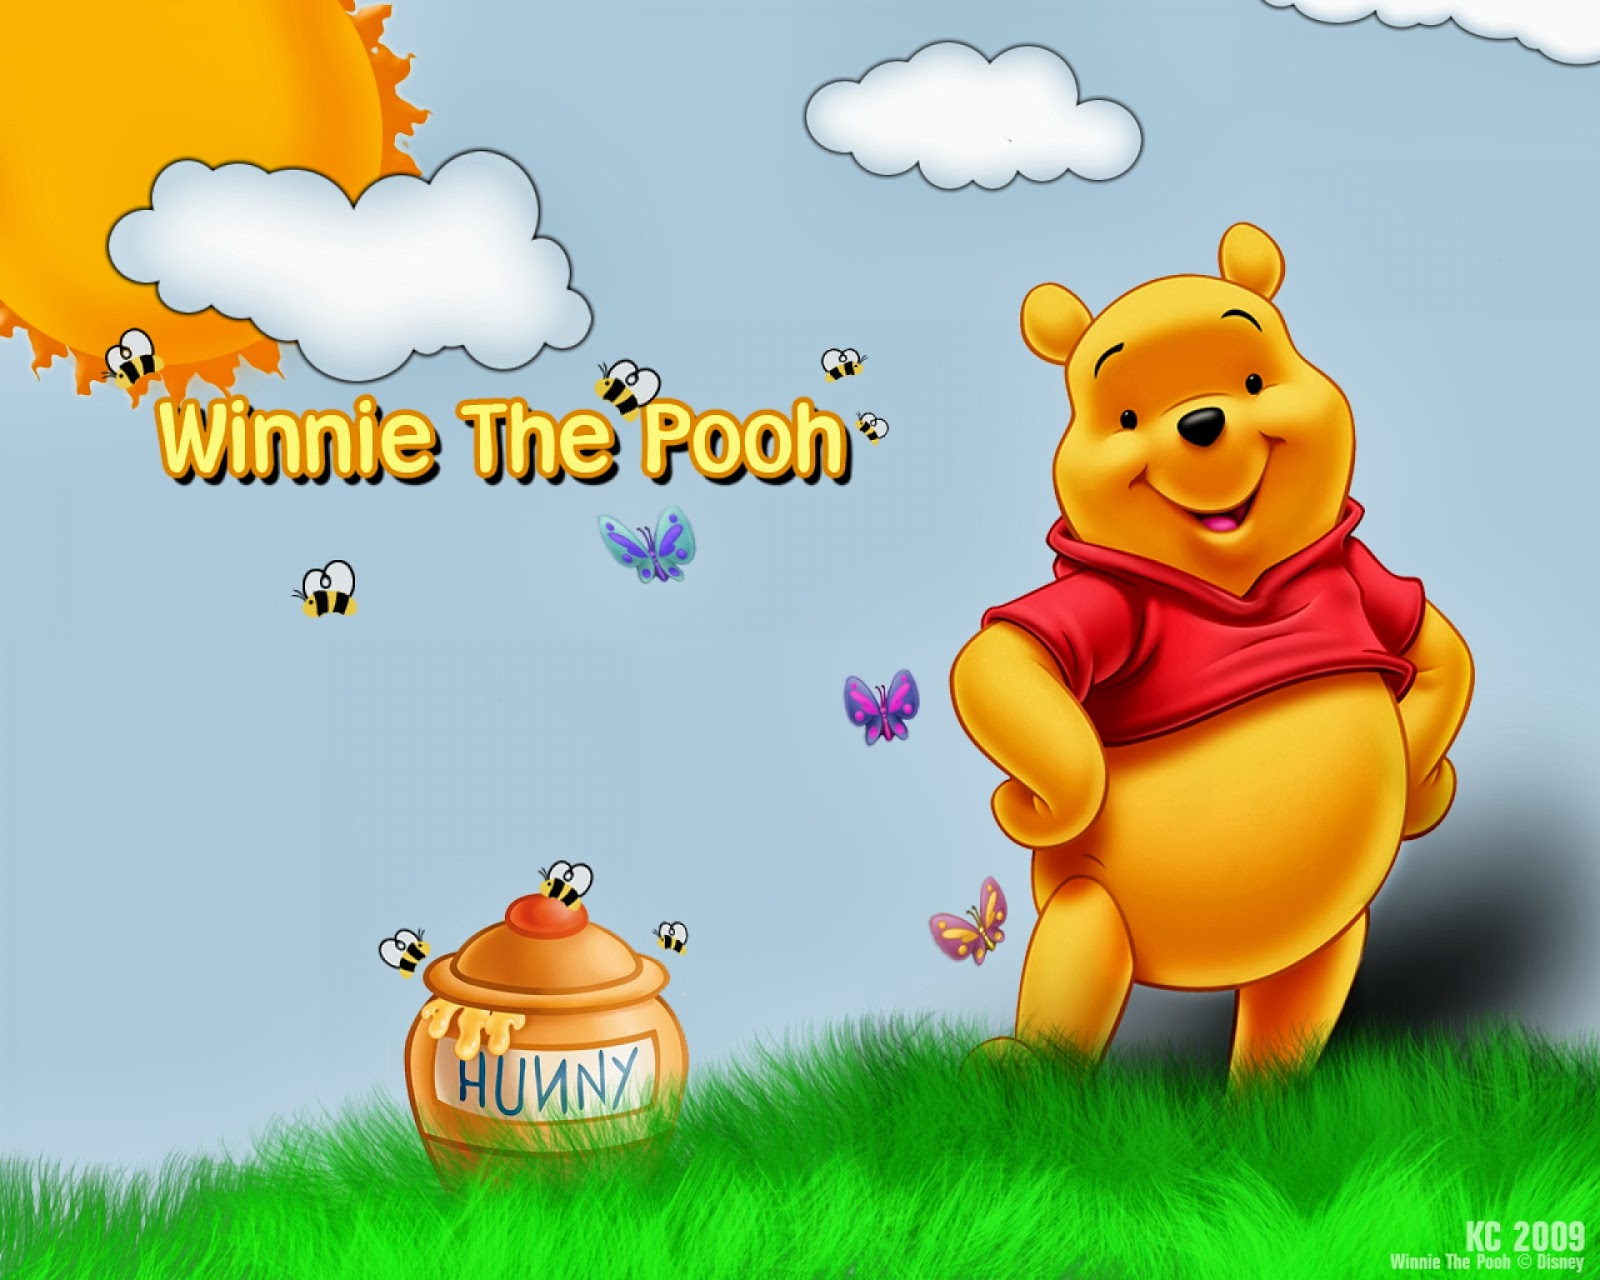 HD Wallpapers 4u Free Download Winnie The Pooh HD Wallpapers Free